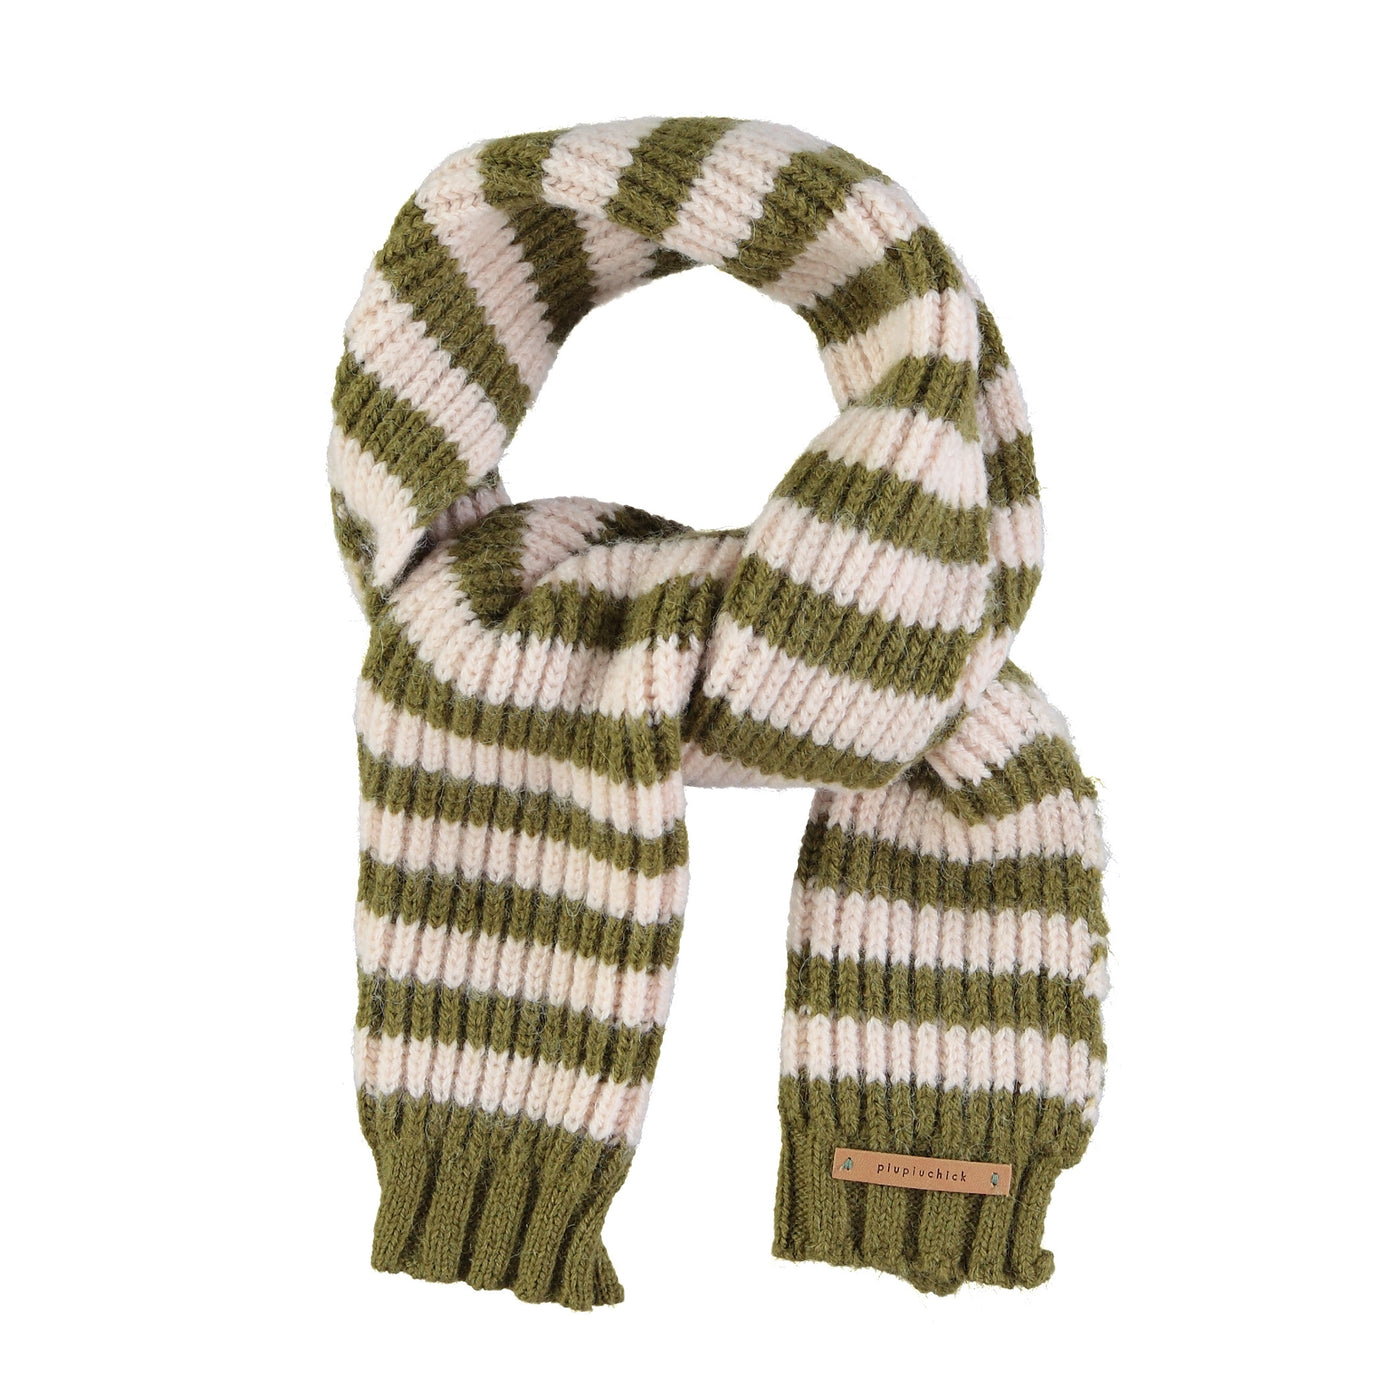 Knitted scarf green & ecru stripes